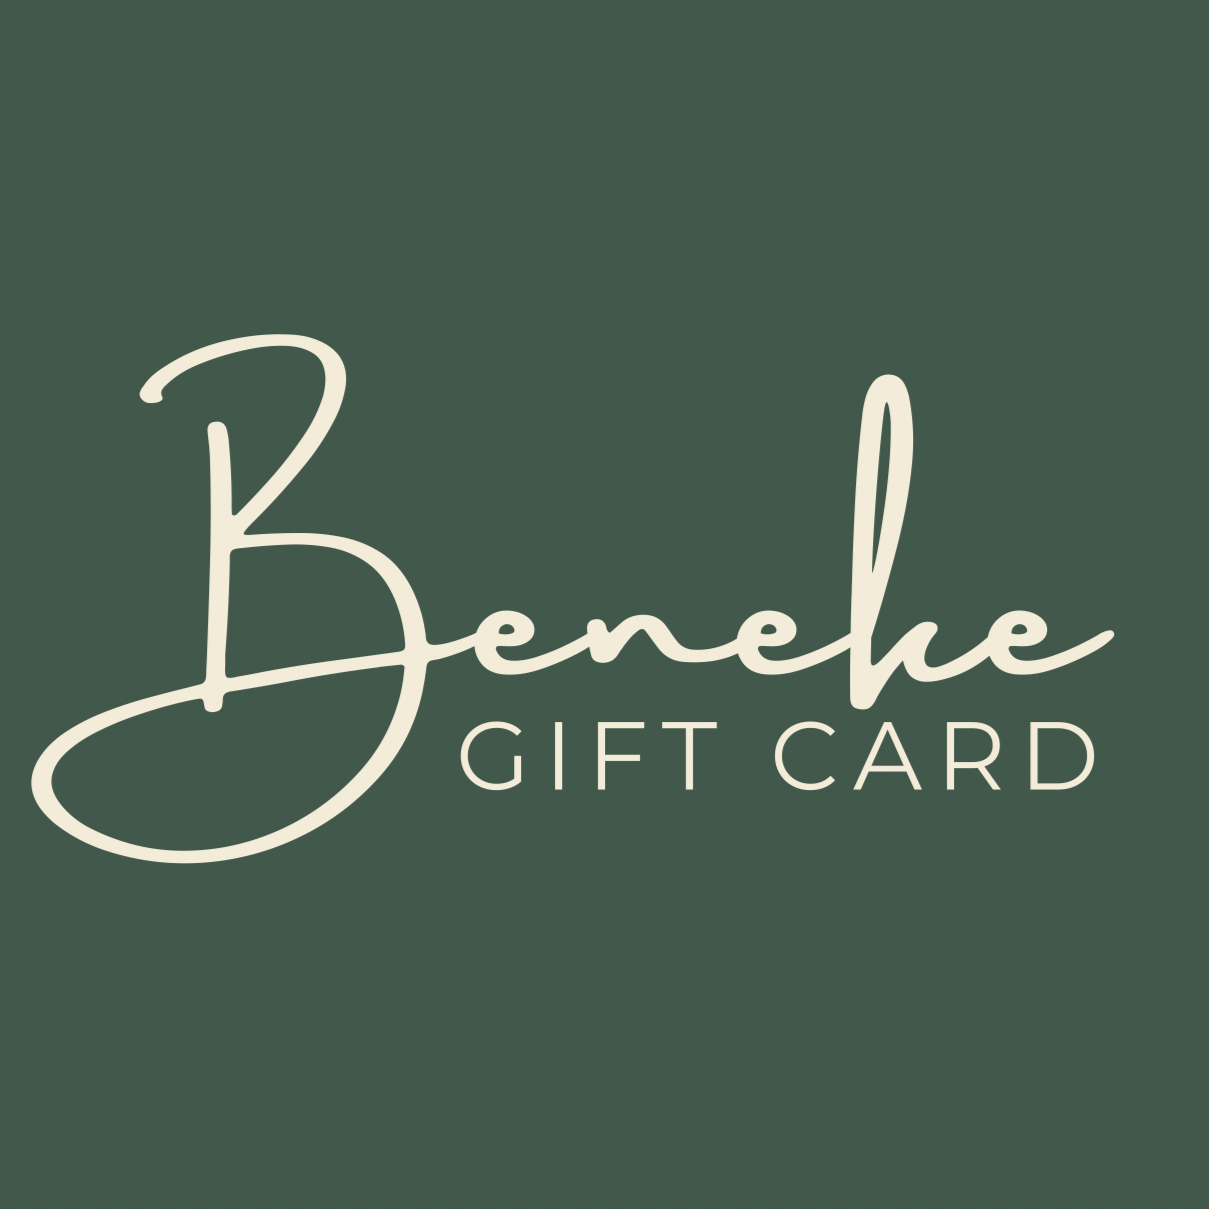 Beneke Gift Card